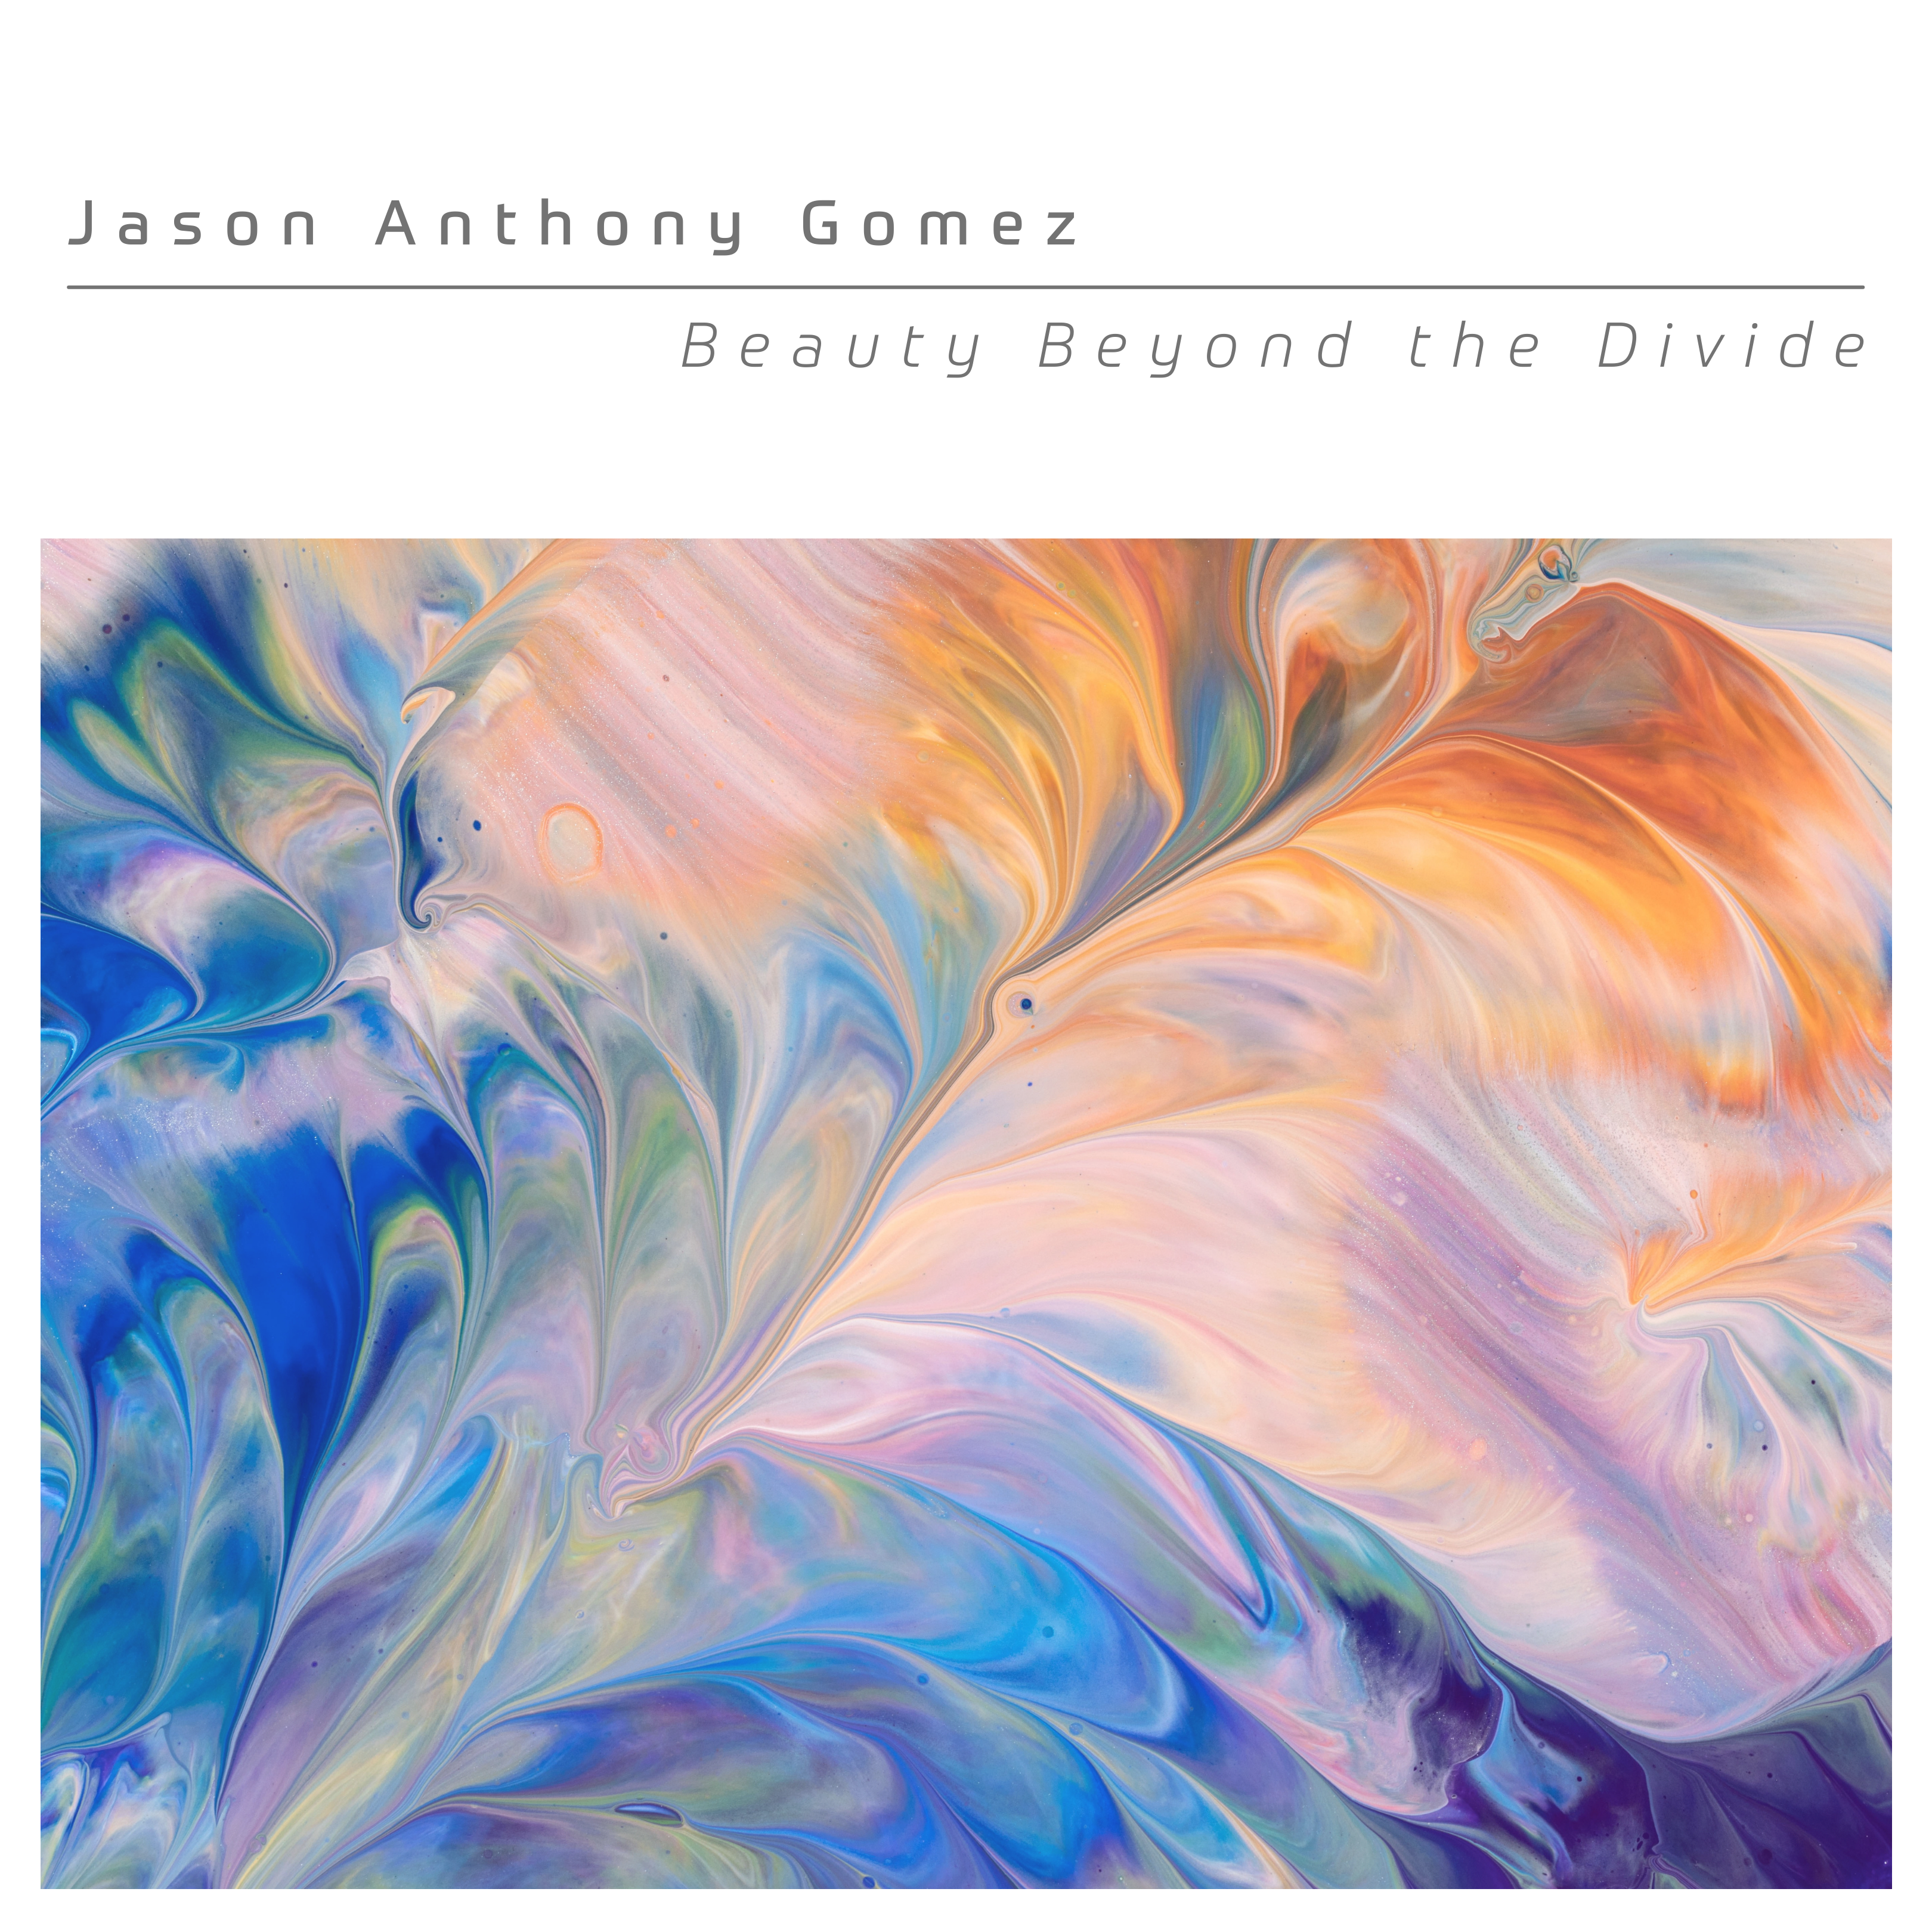 Jason Anthony Gomez – “Beyond The Divide”